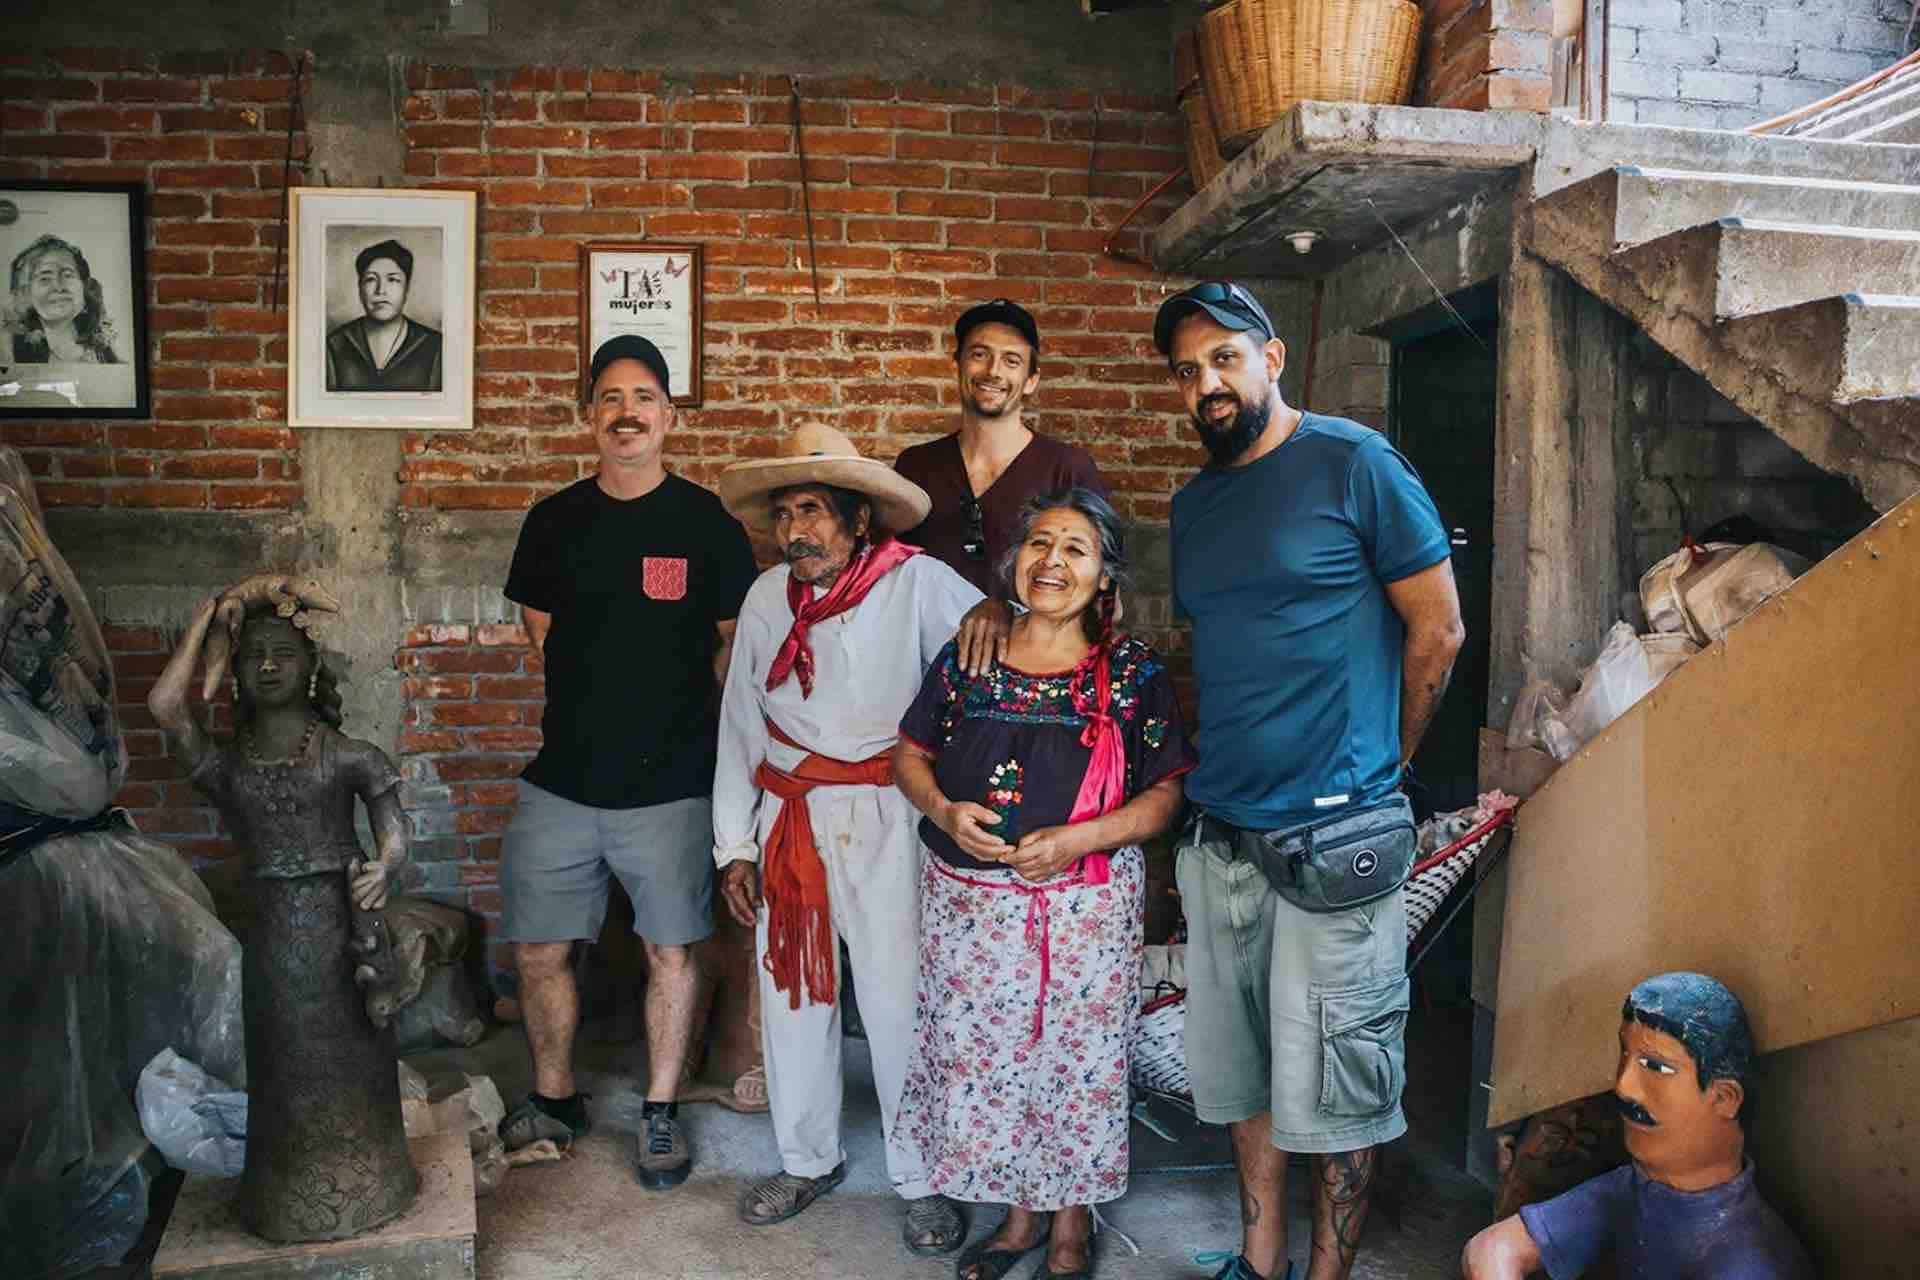 Oaxaca Culture Oaxaca Crafts Oaxaca cuisine tour group with old Mexican couple